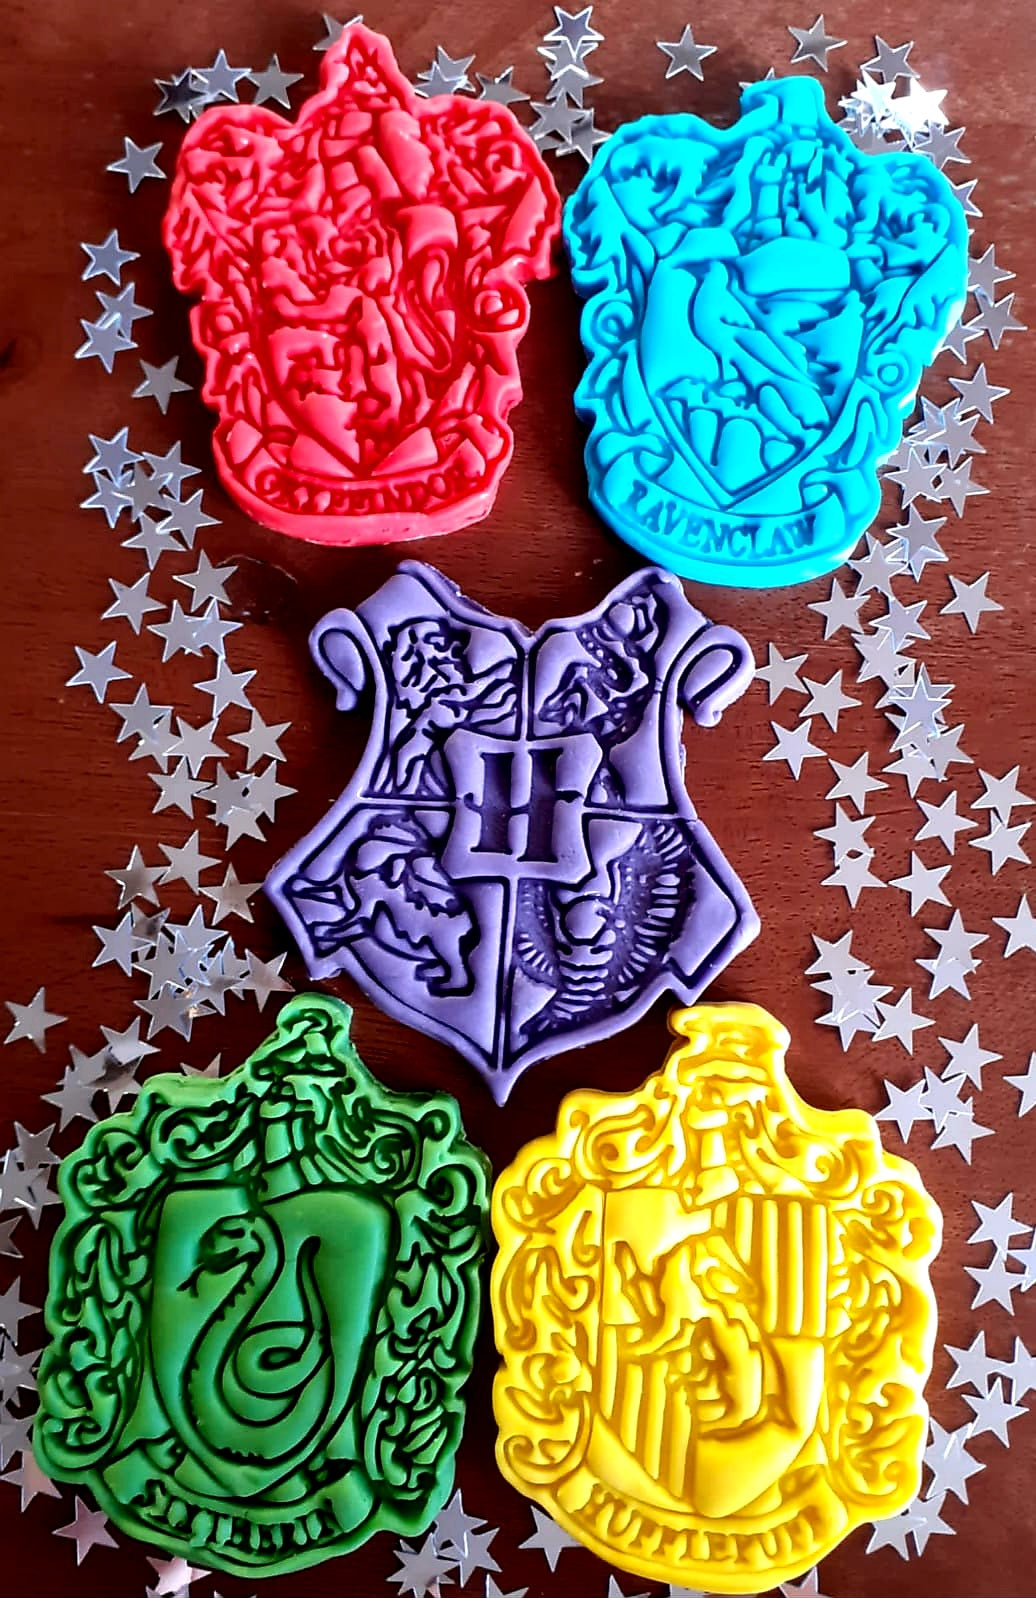 Harry Potter 266-908 Cookie Cutter Set